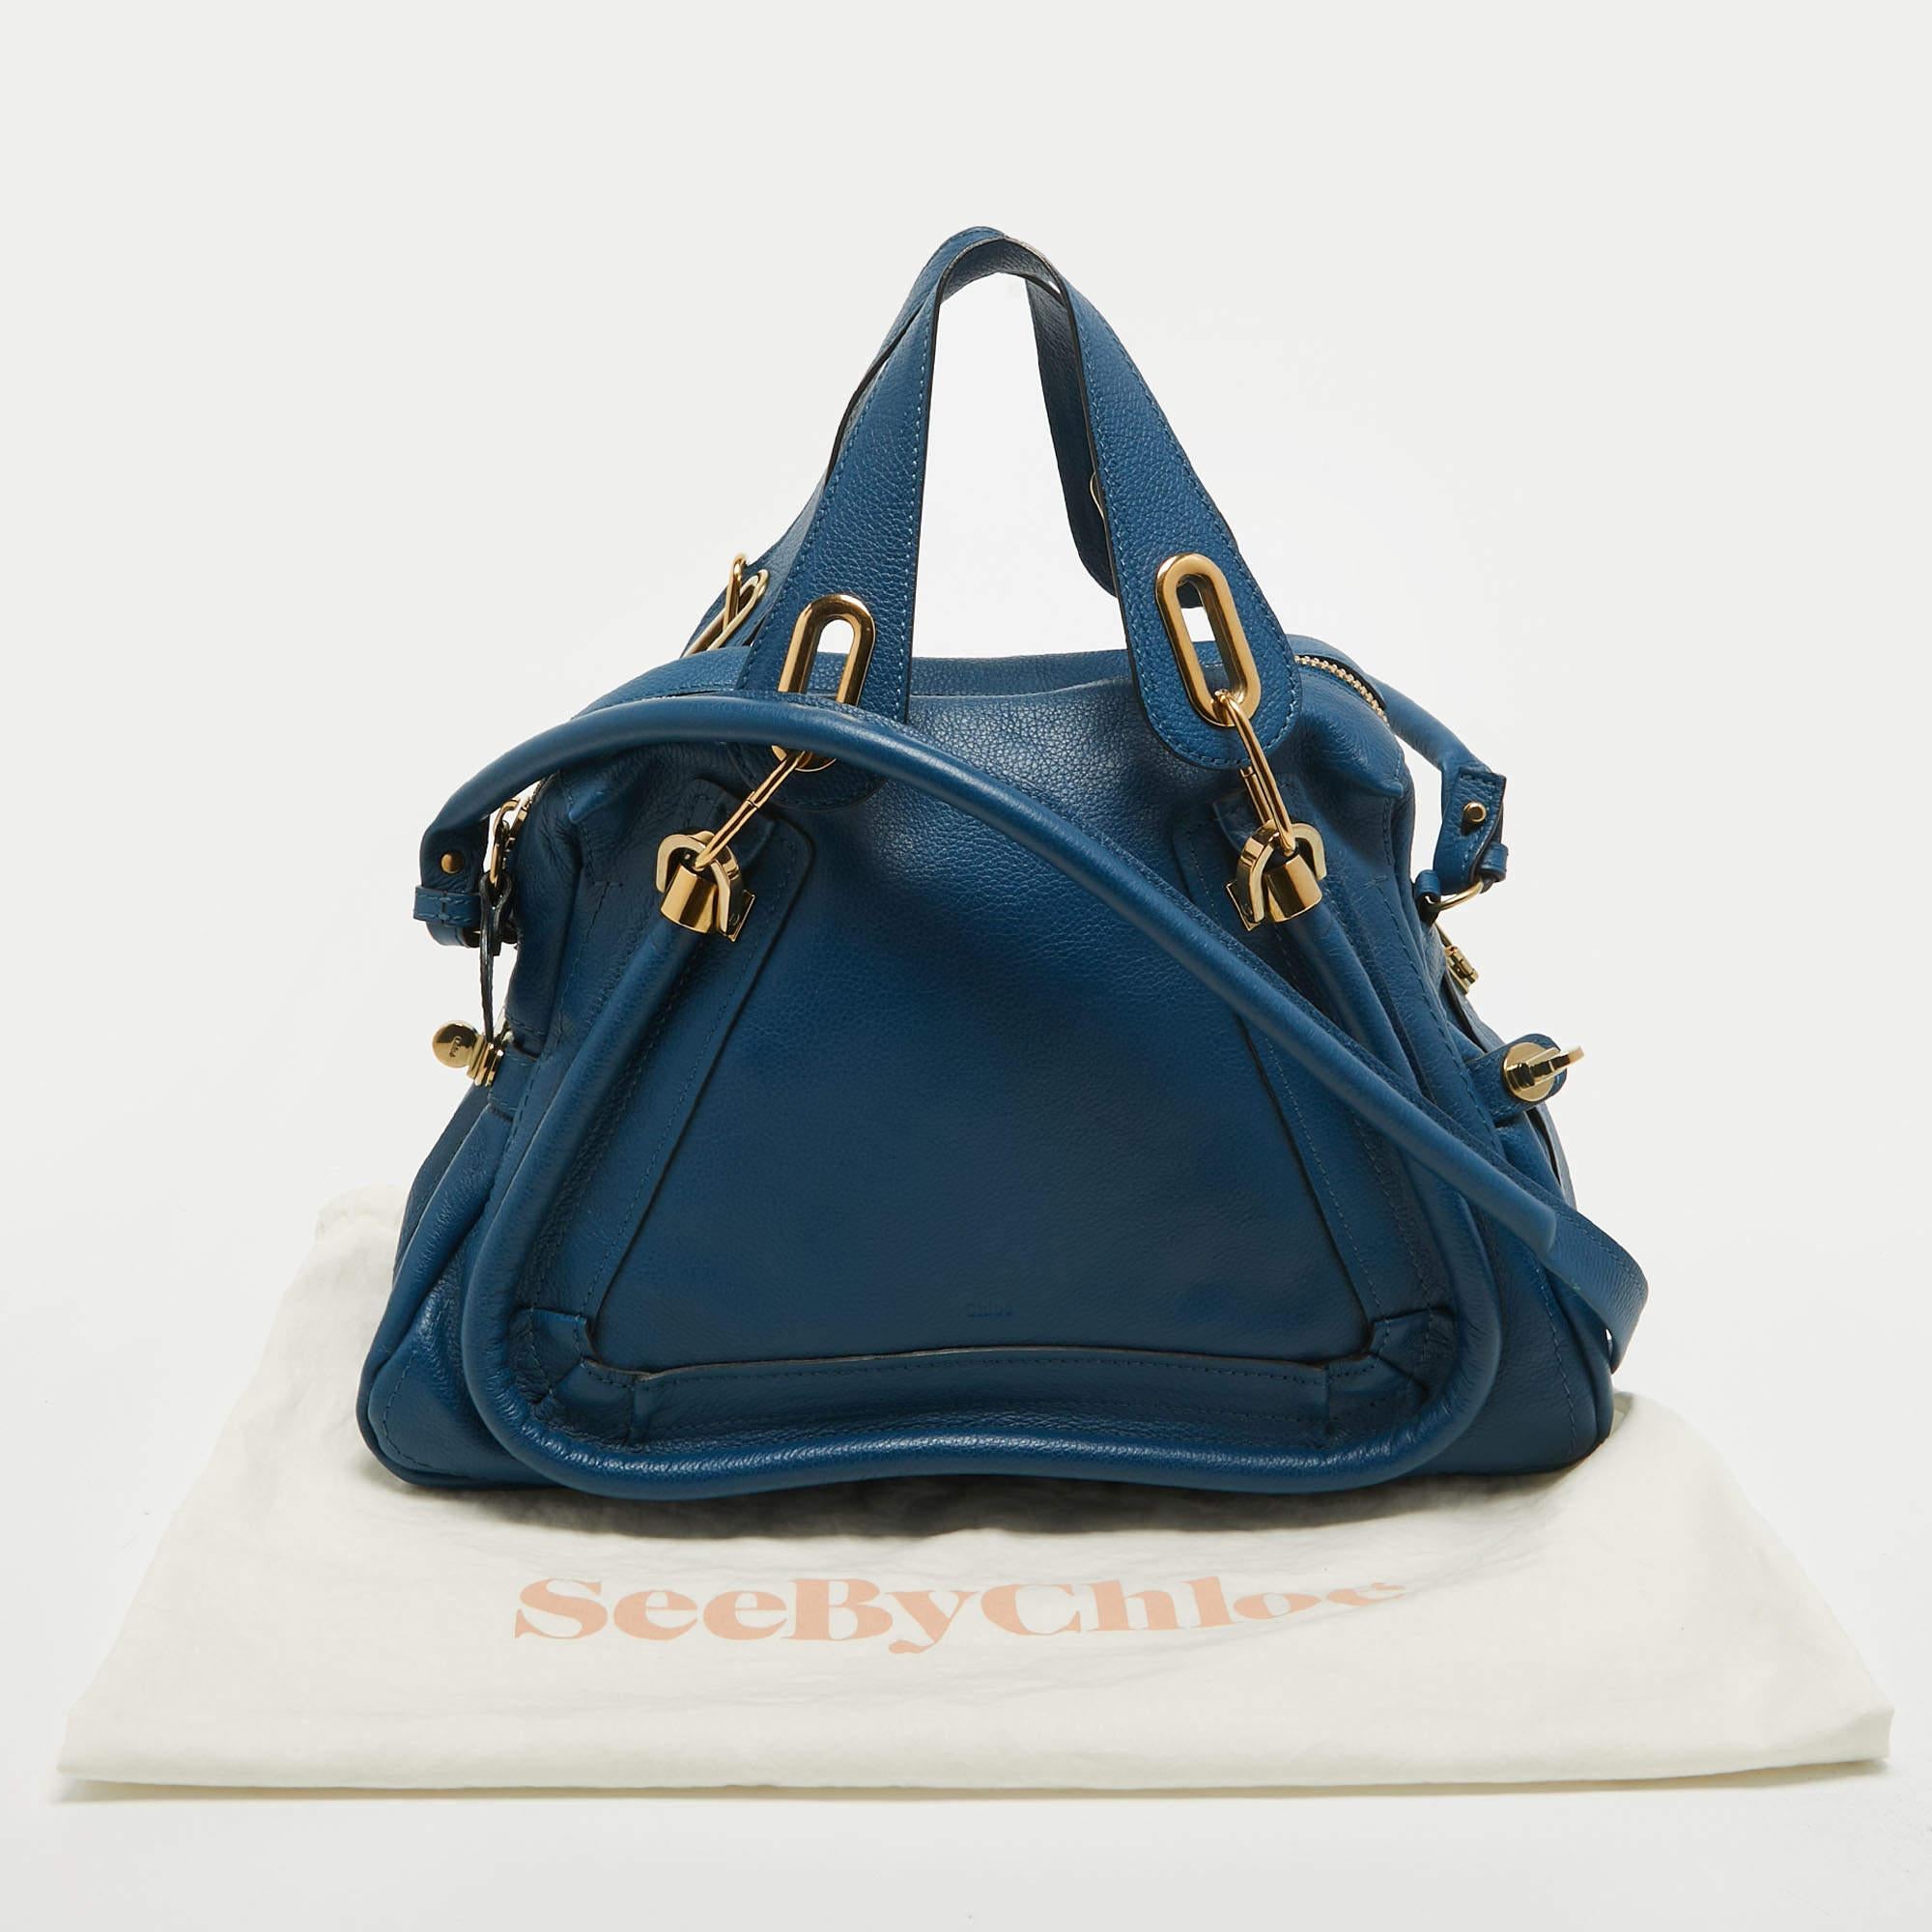 Chloe Blue Leather Medium Paraty Satchel In Good Condition For Sale In Dubai, Al Qouz 2